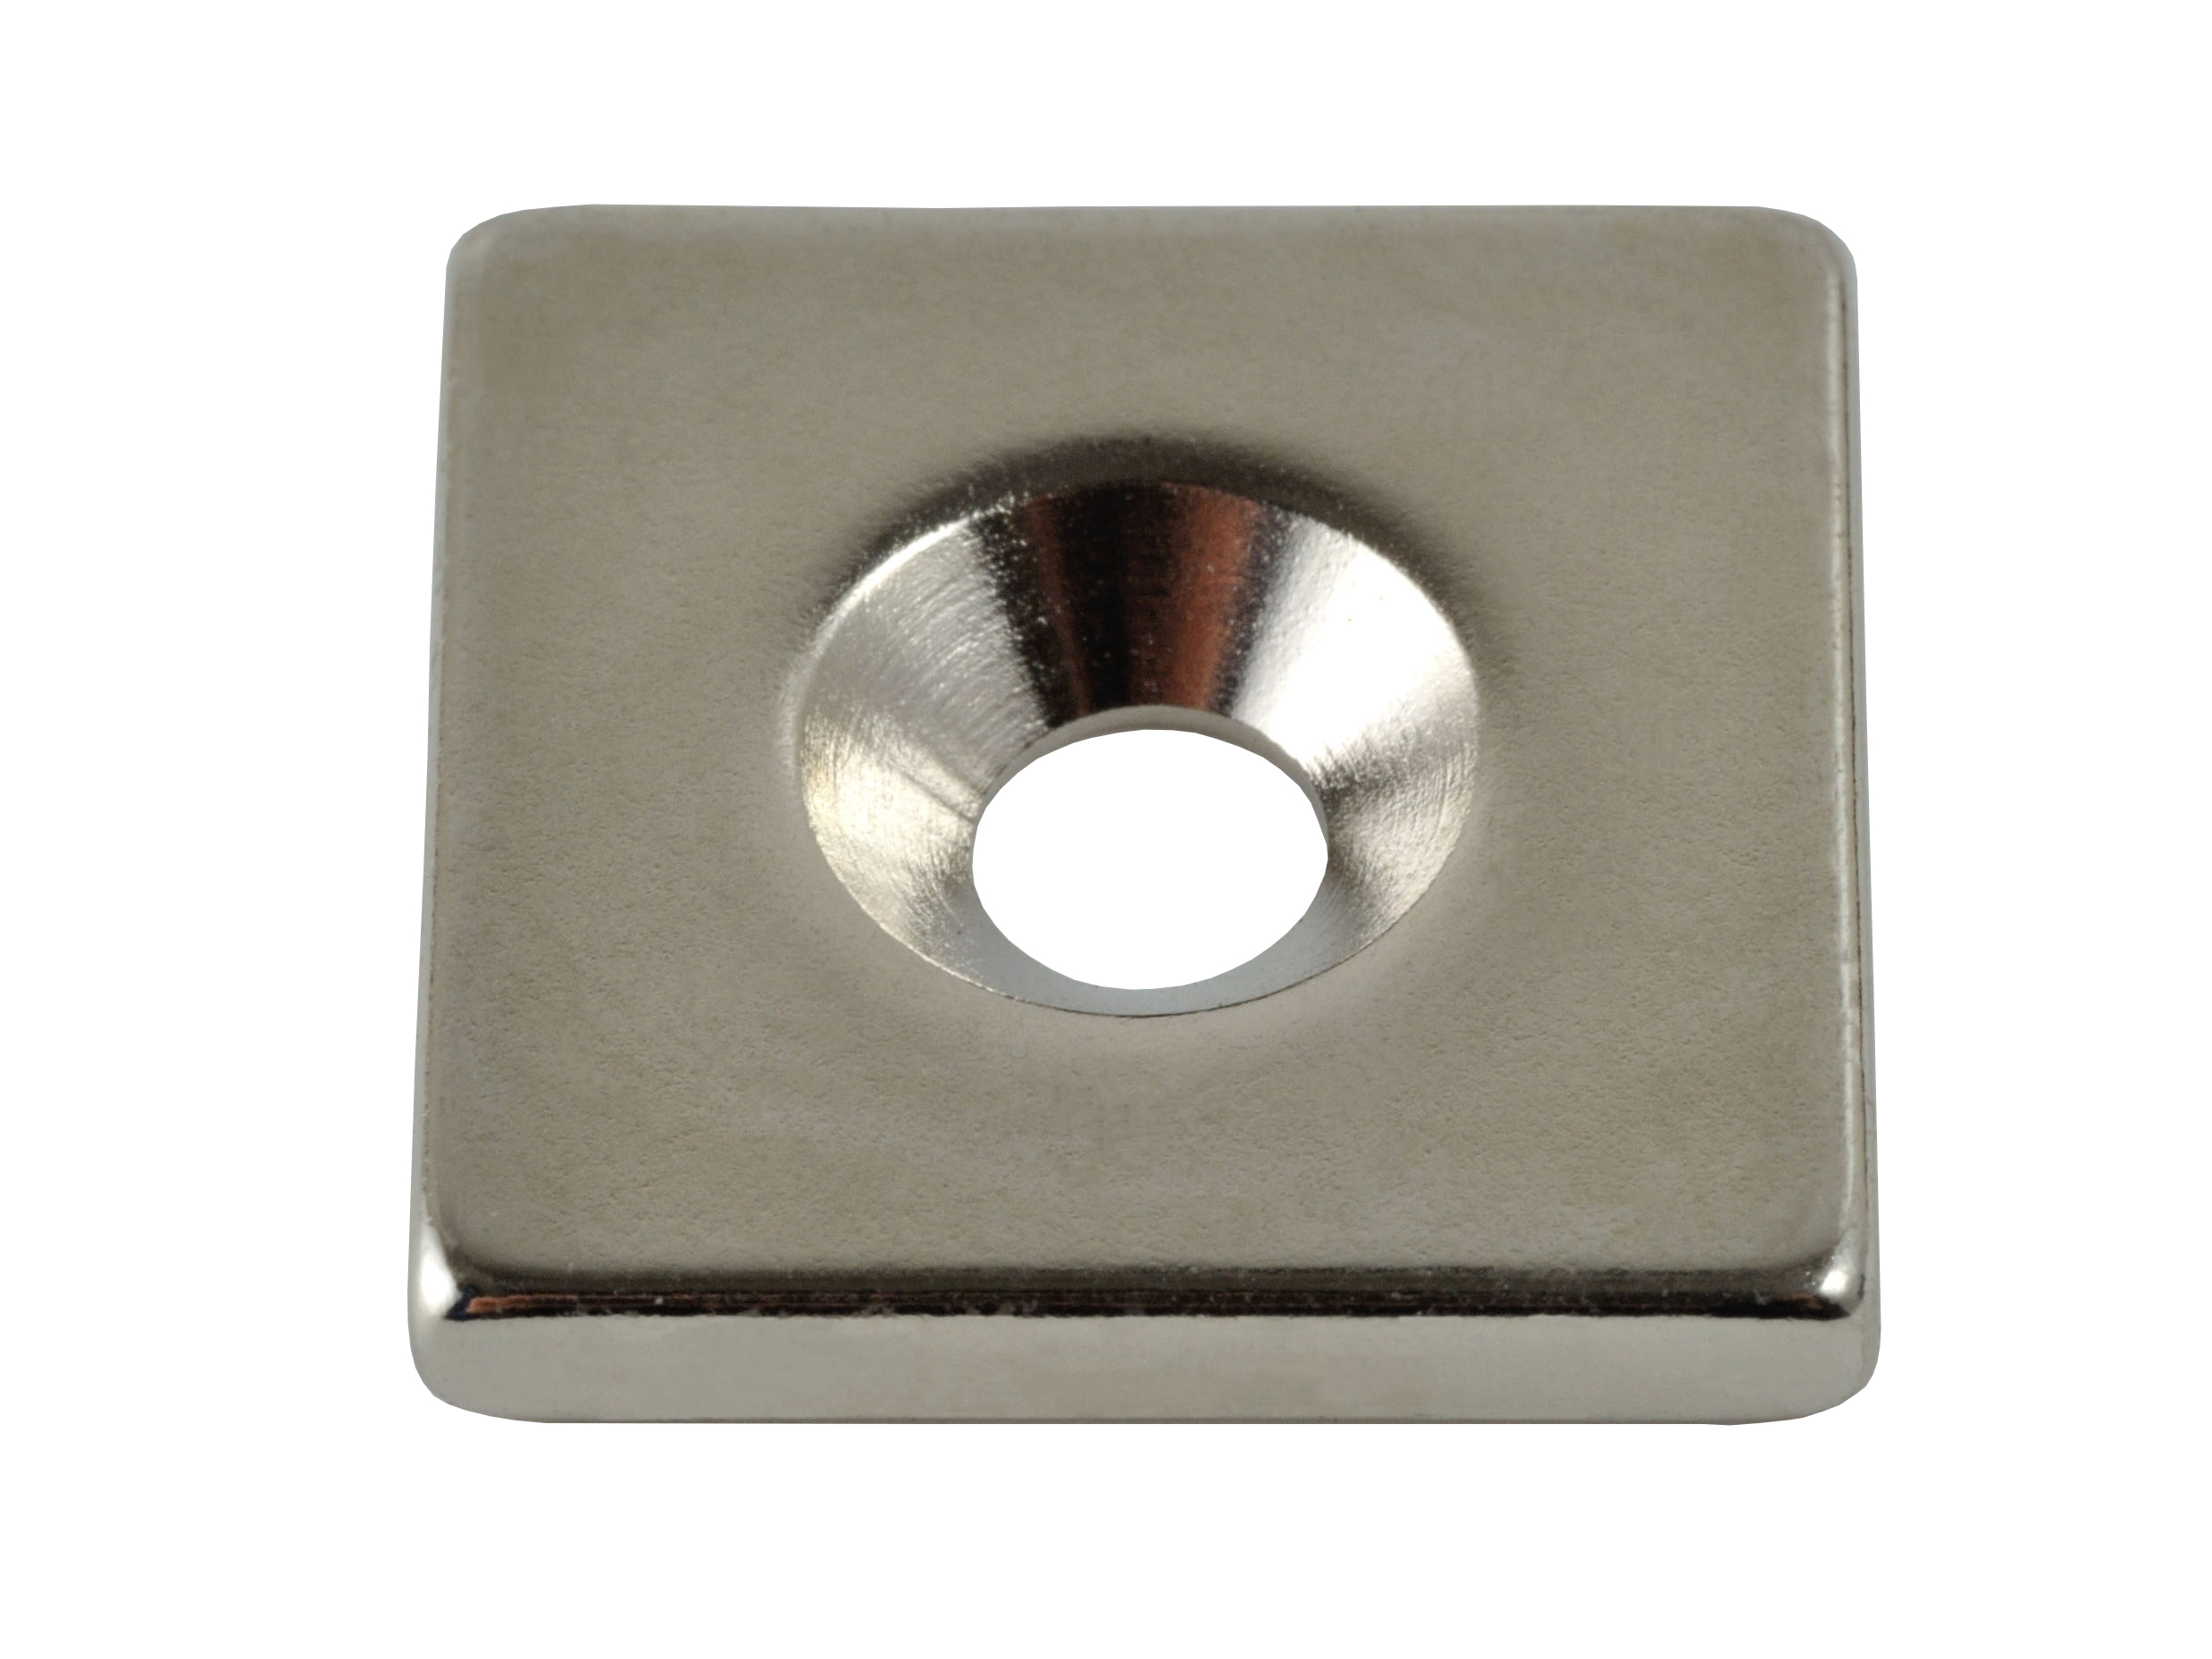 Rectangular Type Neodymium Magnet With Countersink NOSC15